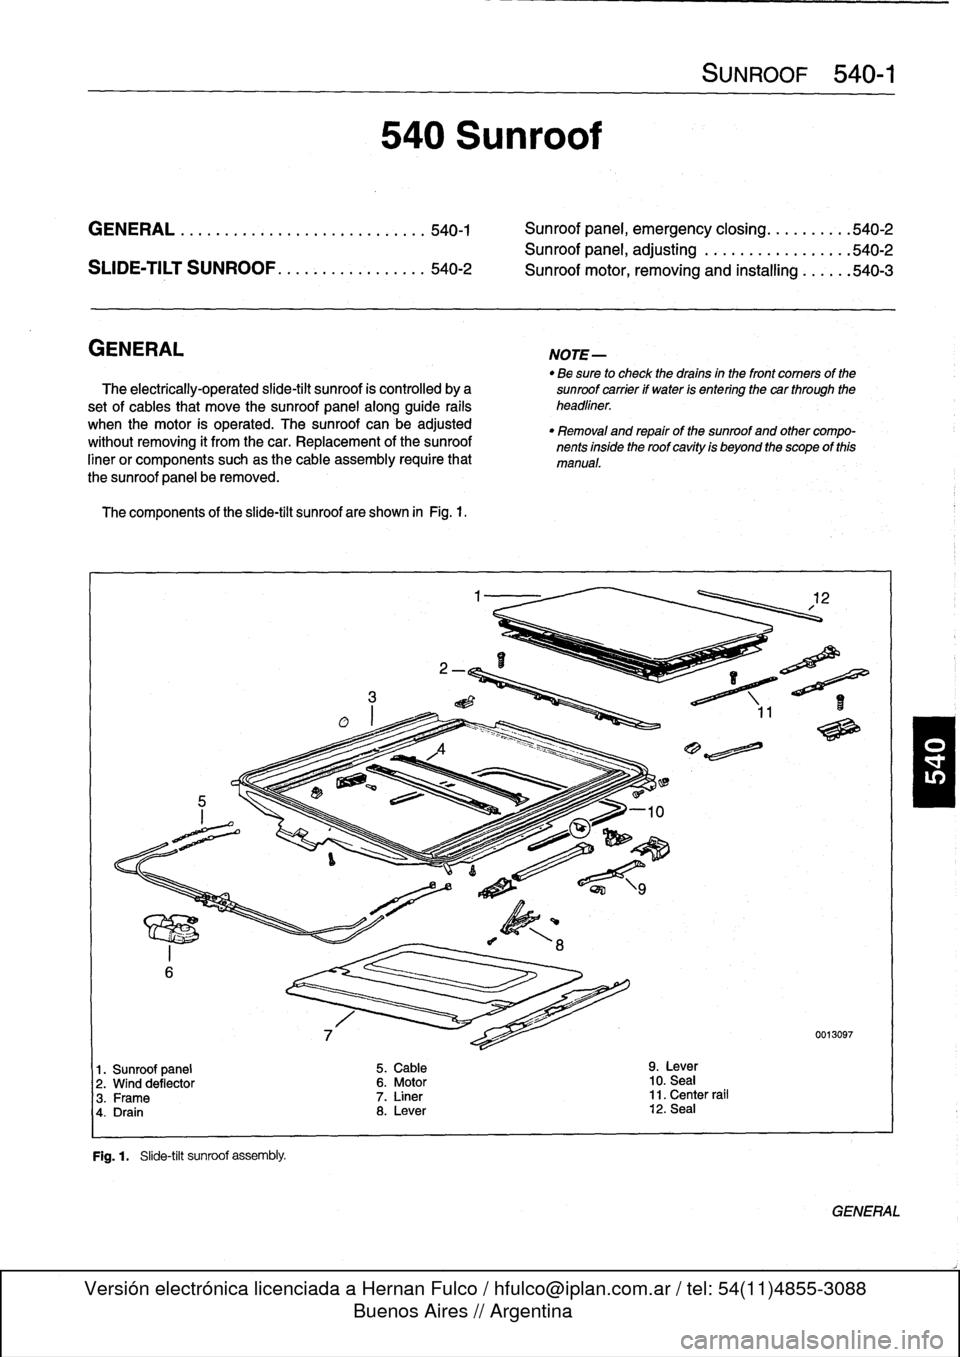 BMW 318i 1994 E36 Workshop Manual 
GENERAL
...
.
.
.
.
.
................
.
.
.
.
540-1

	

Sunroof
panel,
emergency
closing
.......
.
.
.540-2

Sunroof
panel,
adjusting
..
.
...........
.
.
.540-2

SUDE-TILT
SUNROOF
.
.
.
.
.
.
.
.
.